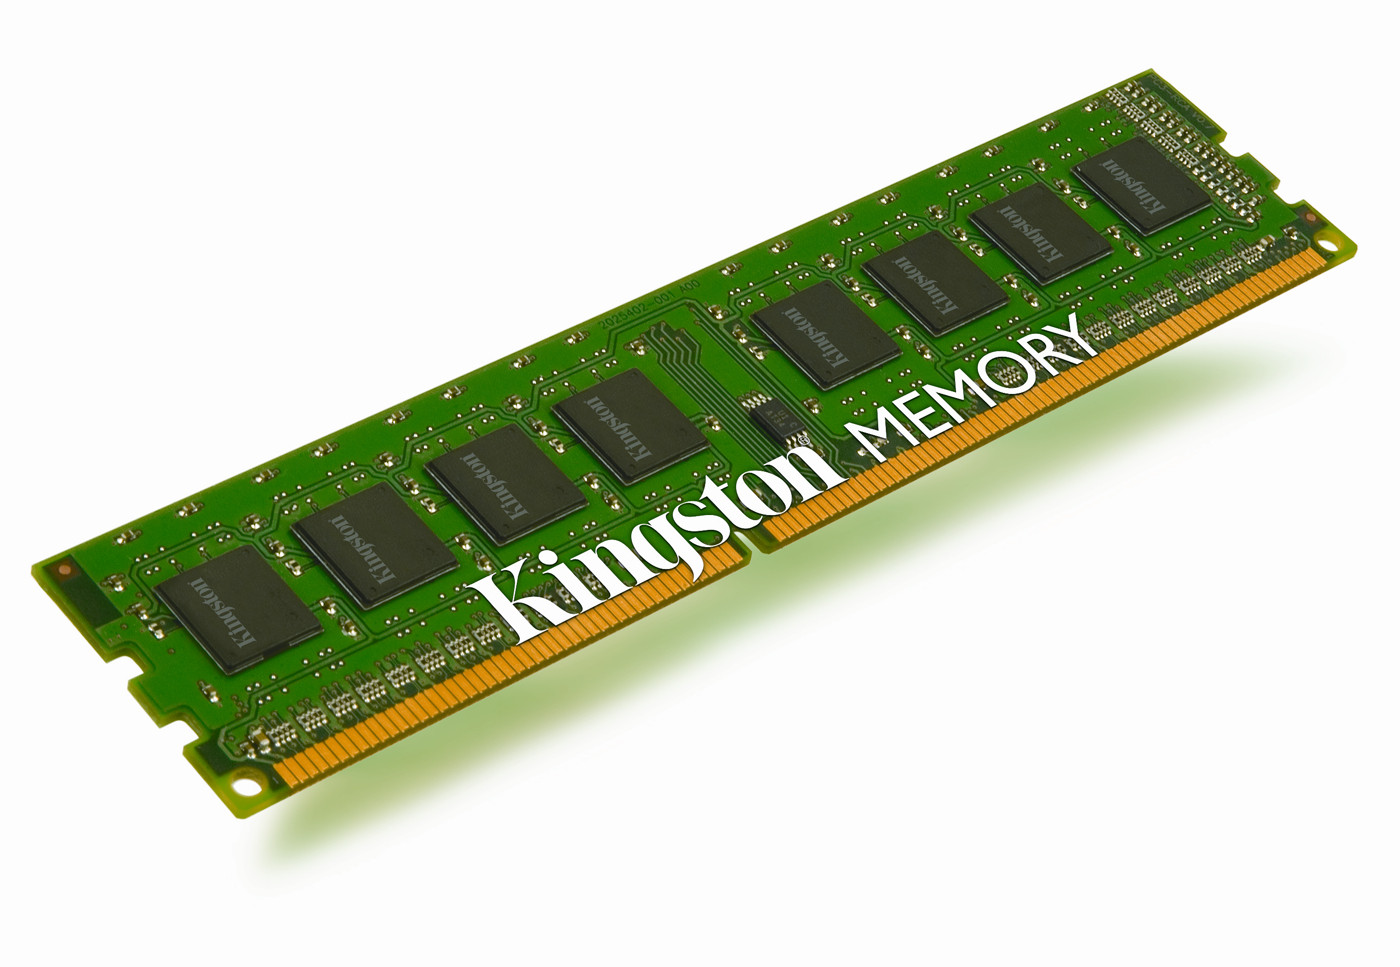 KINGSTON DDR3 8GB 1600MHz DDR3 Non-ECC CL11 DIMM